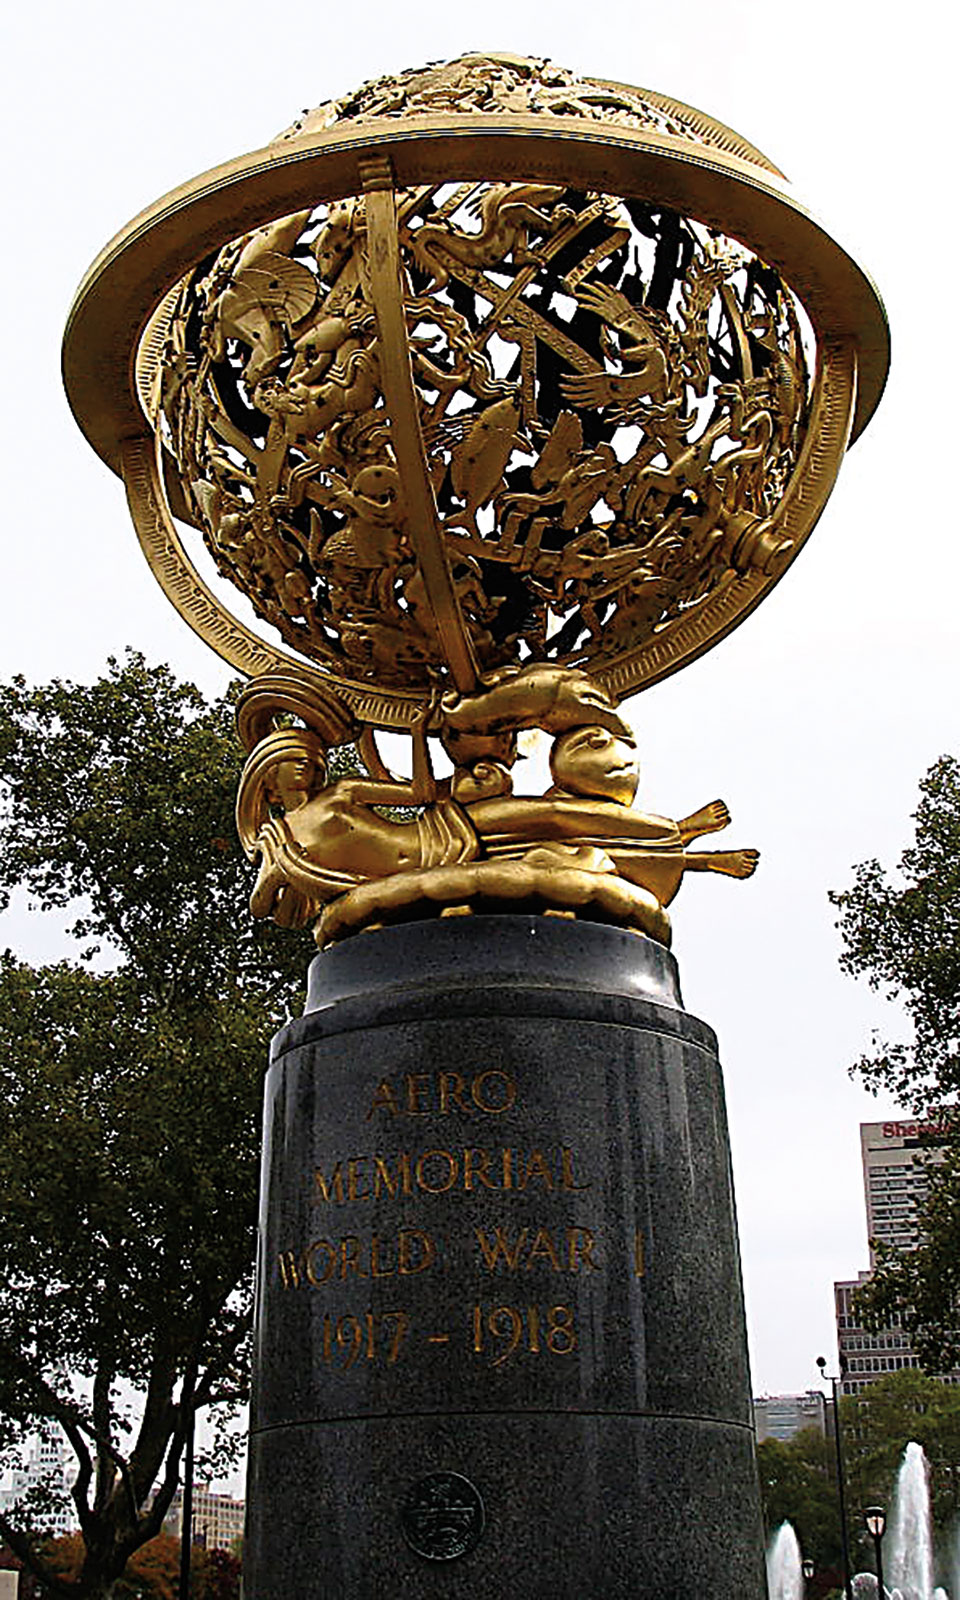 The Celestial Sphere Aero Memorial by Paul Manship in Philadelphia, PA, photo from Wikimedia Commons.